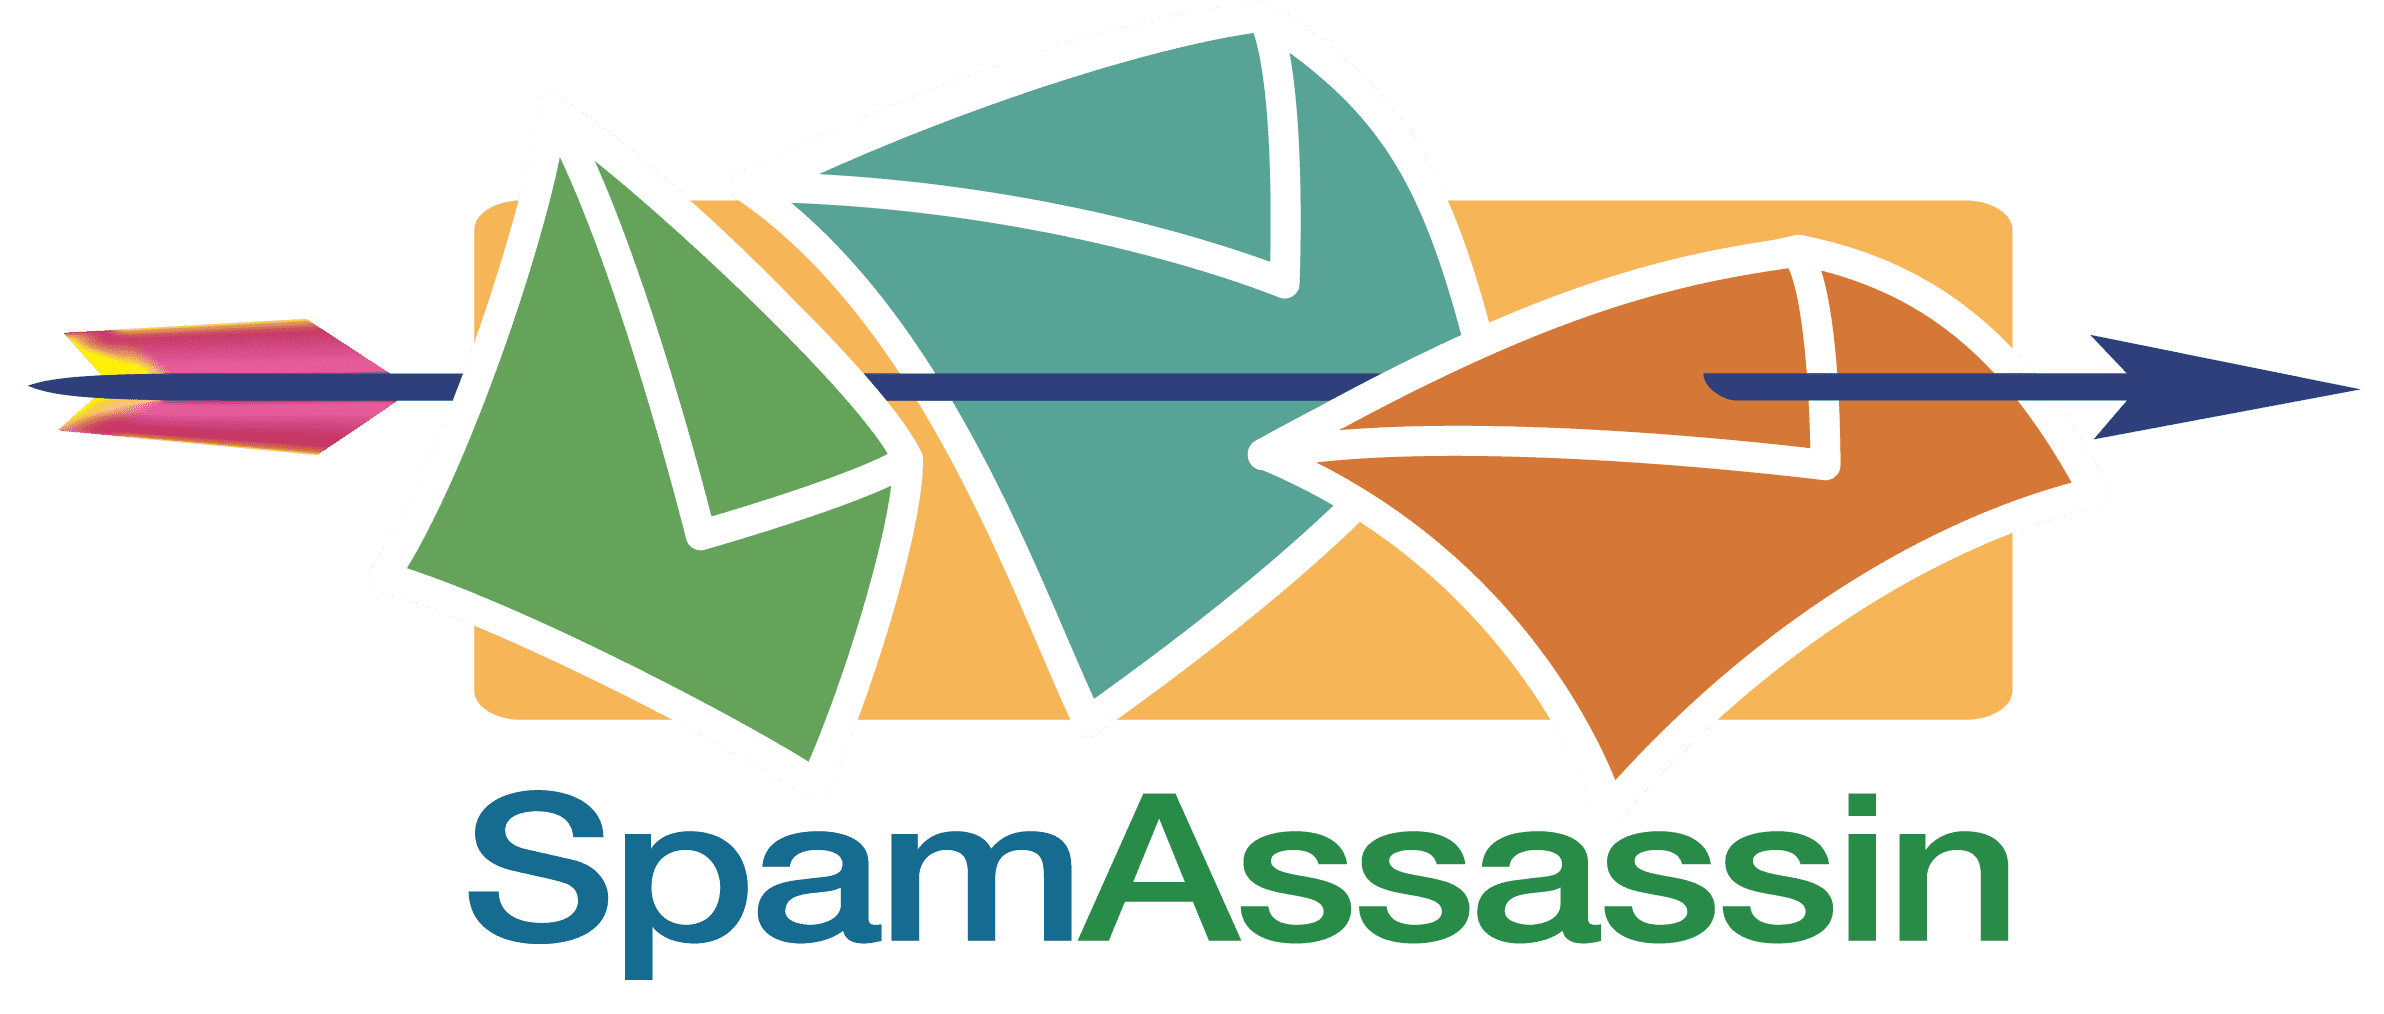 spam-assasin-logo-transparent